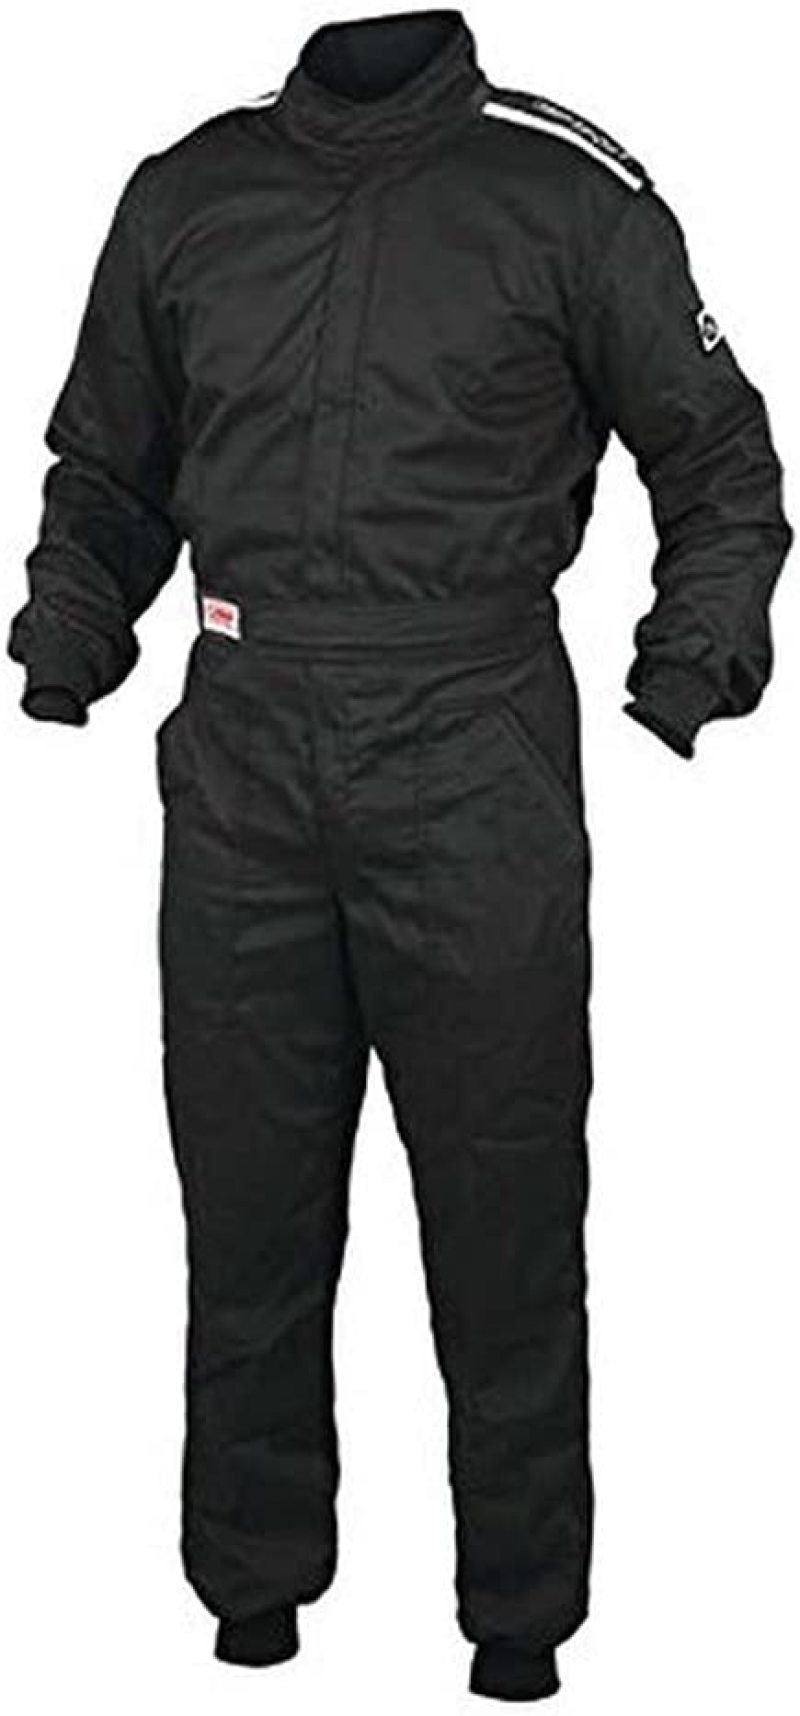 OMP Os 10 Suit - Medium (Black) - IA0-1901-A01-071-M